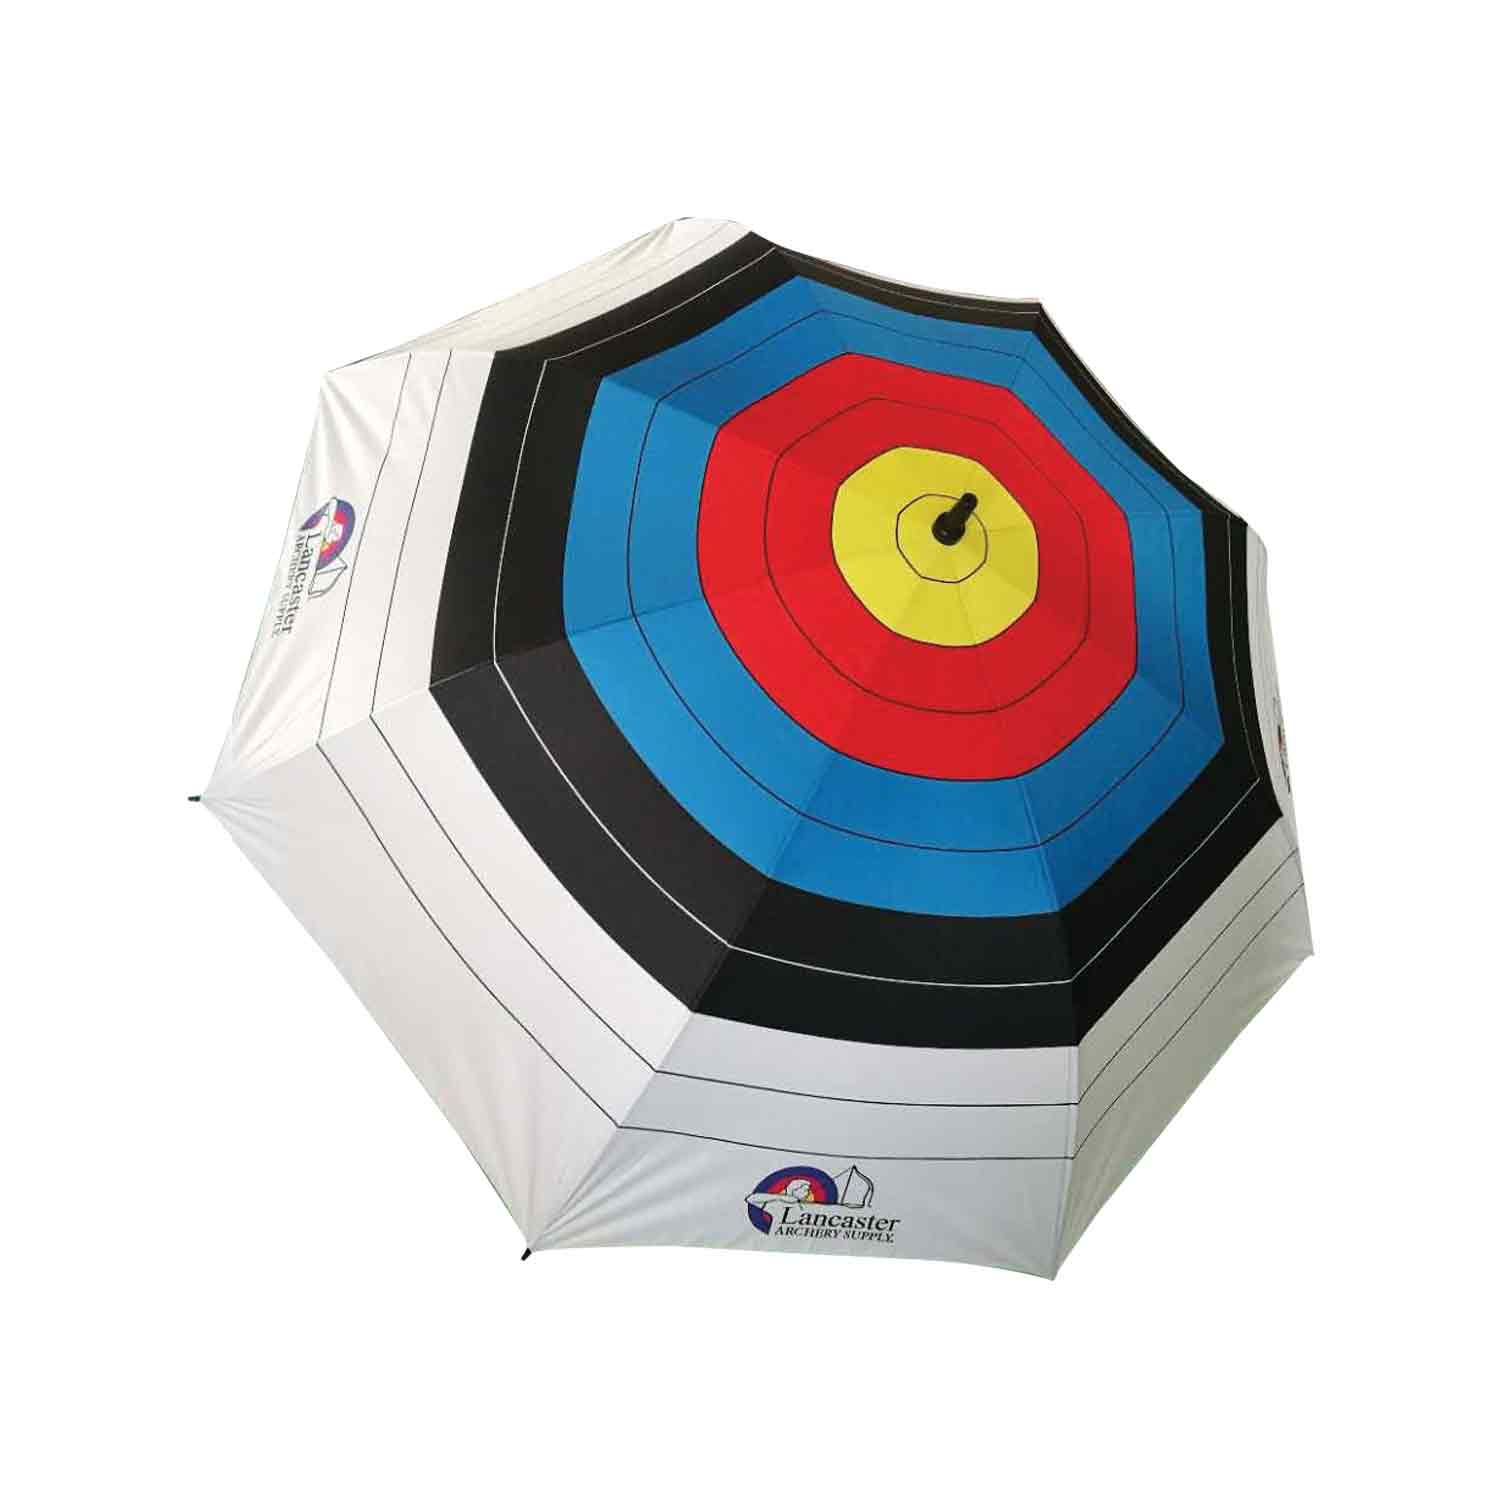 Lancaster Archery Supply Target Umbrella